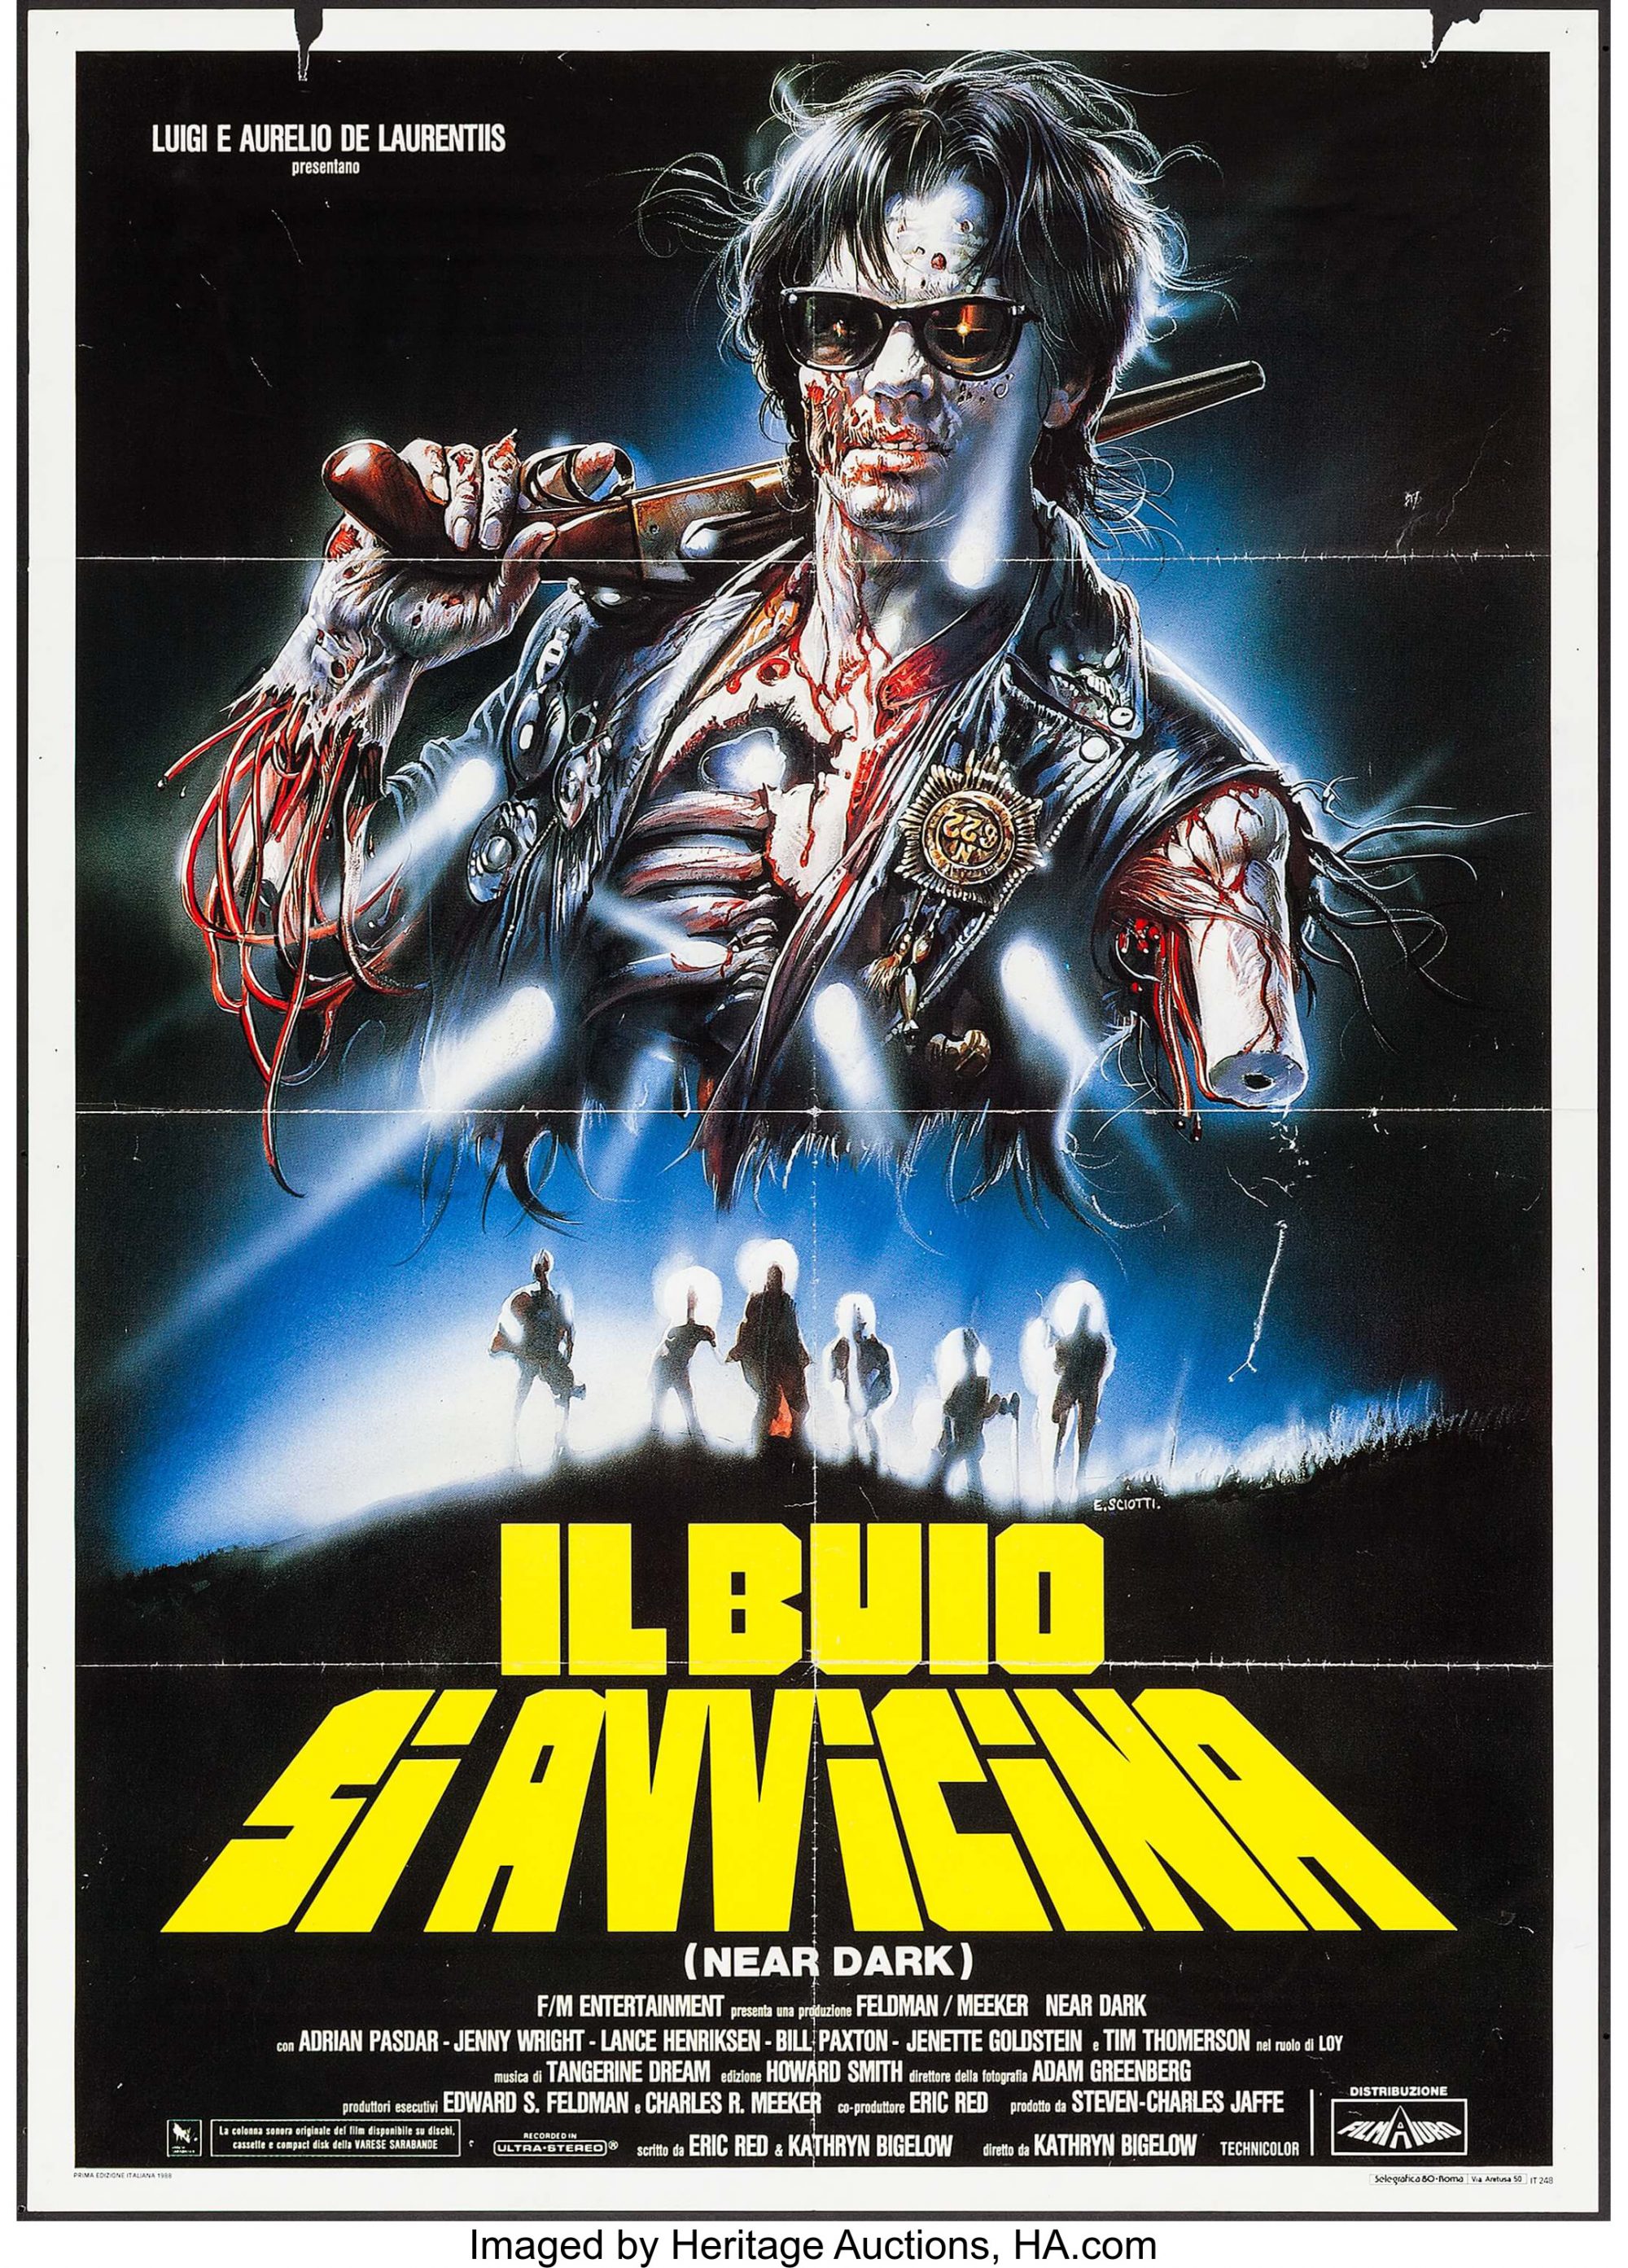 Near Dark (1988) Italian poster